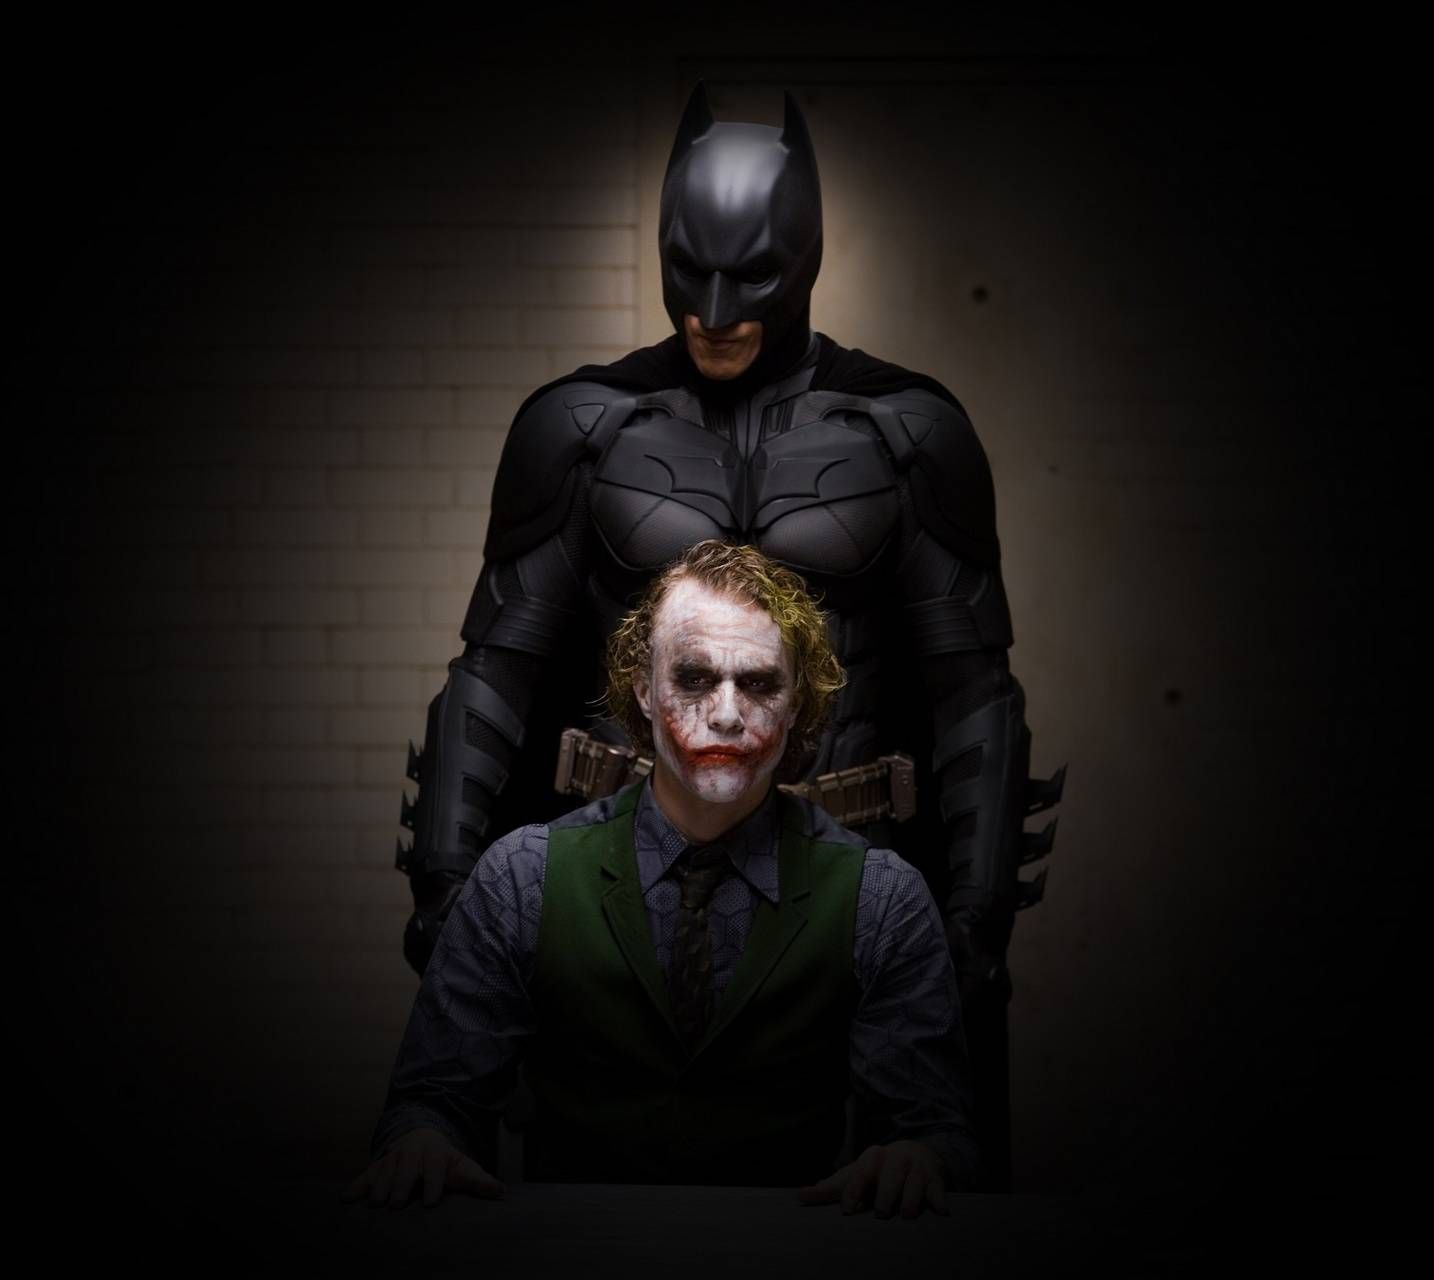 Joker Vs Batman wallpaper